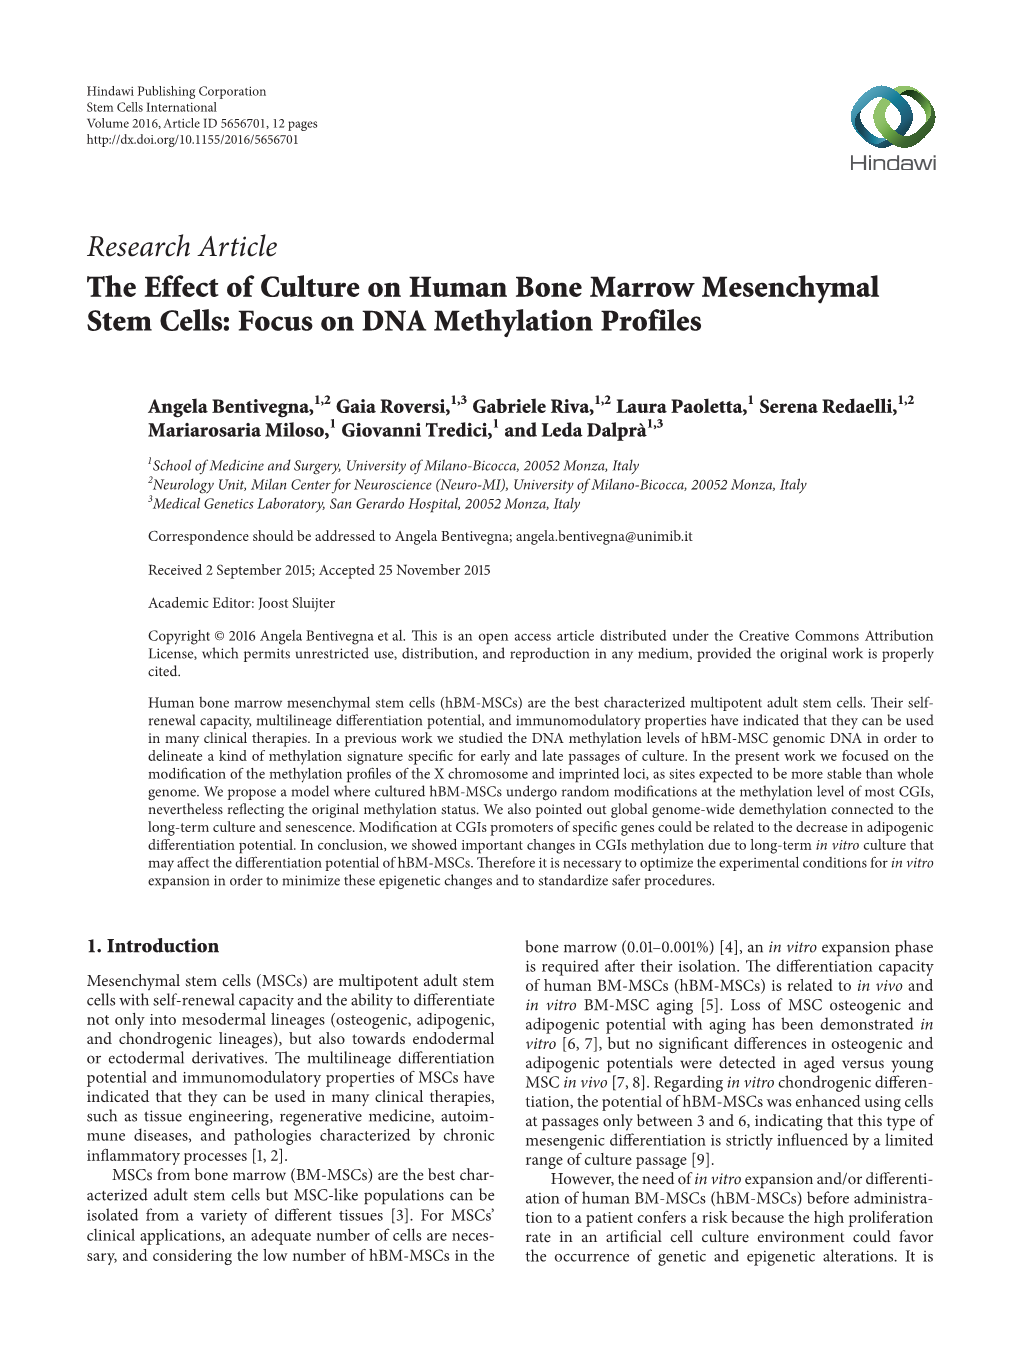 Focus on DNA Methylation Profiles